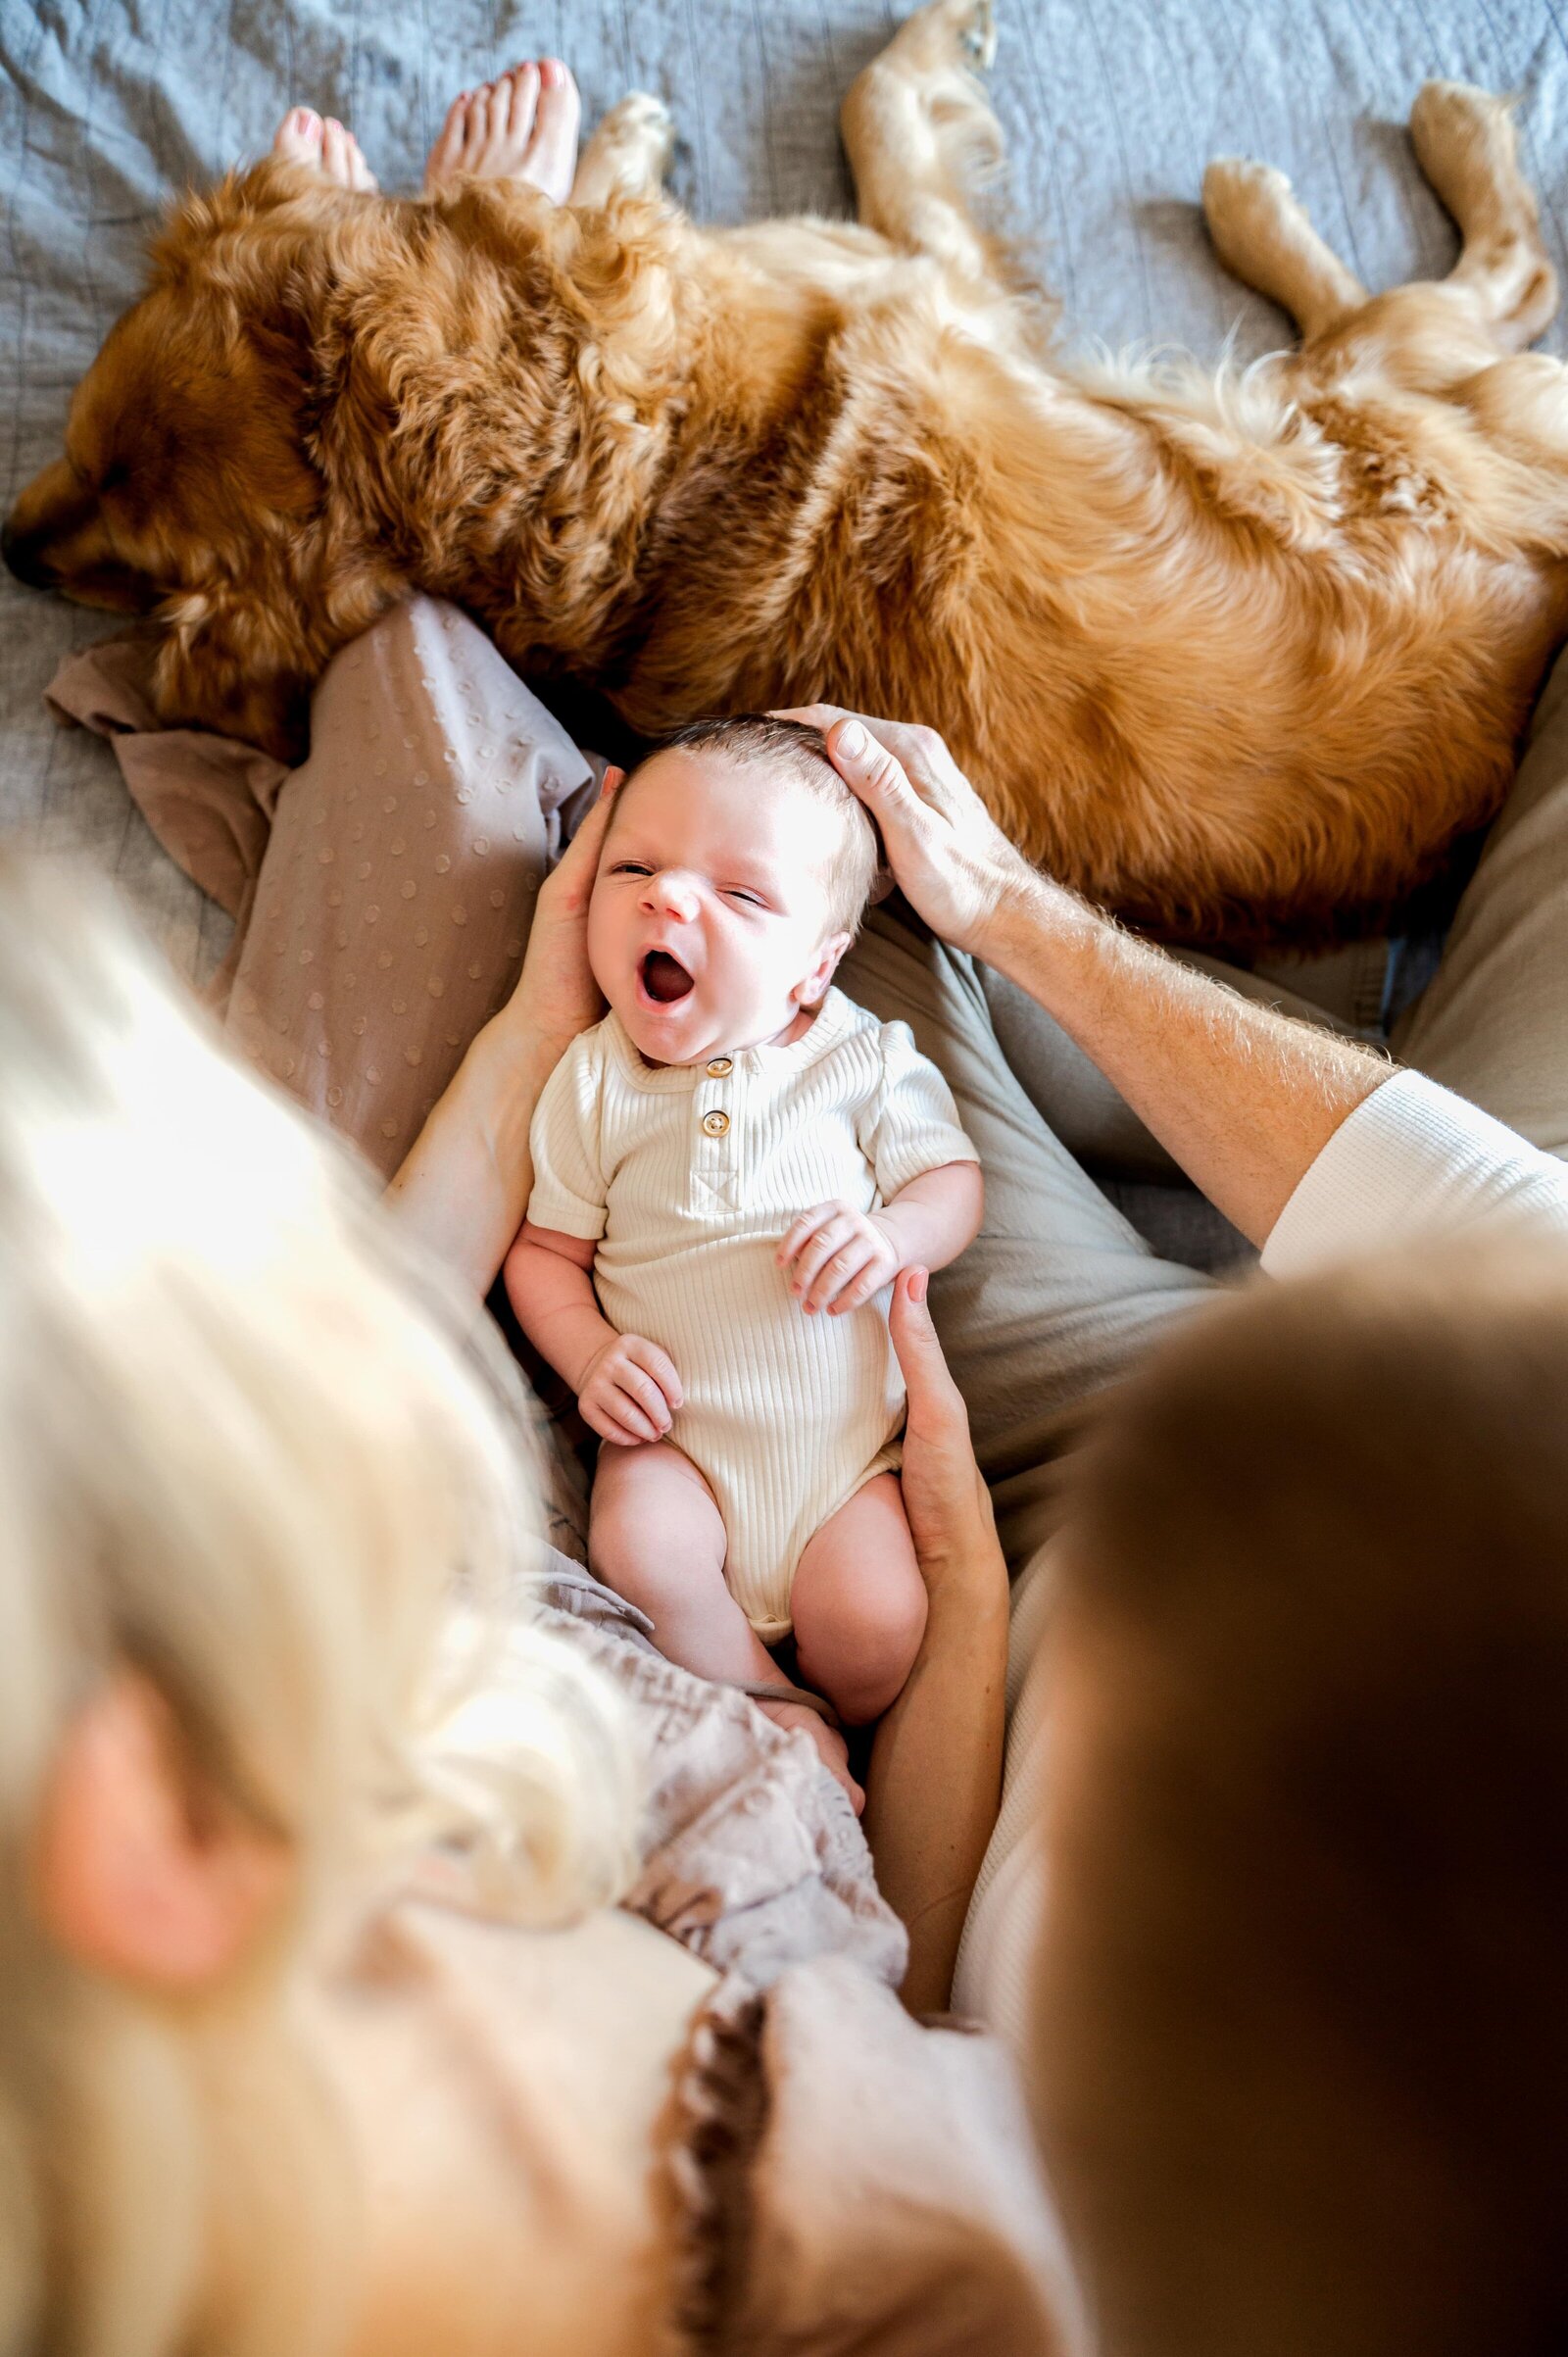 newborn baby boy yawning while parents hold him and dog sleeps